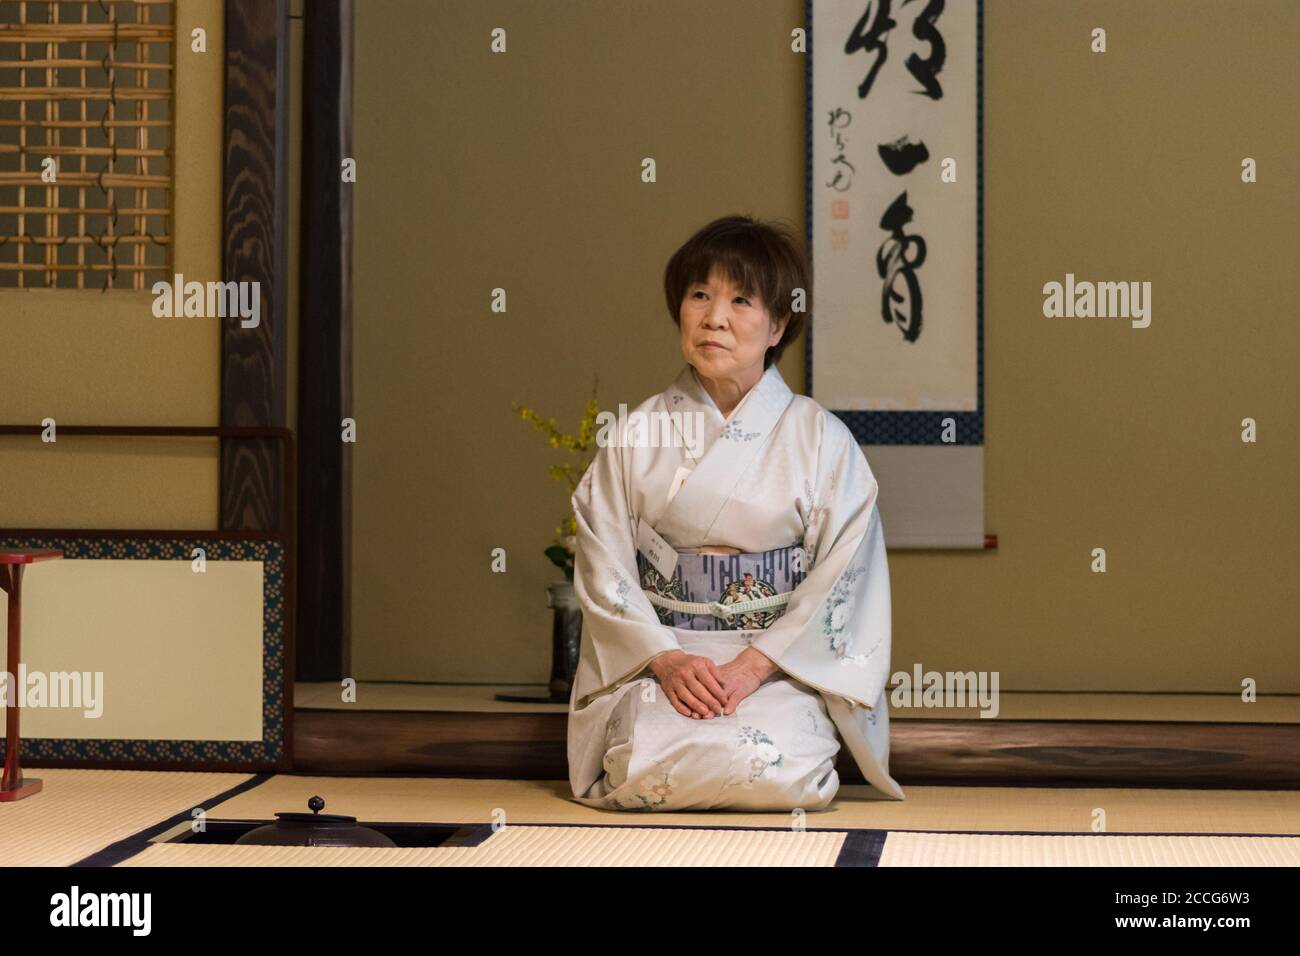 Sakai, Osaka / Japan - February 16, 2018: Japanese tea ceremony master during ceremonial preparation and presentation of powdered green tea matcha Stock Photo